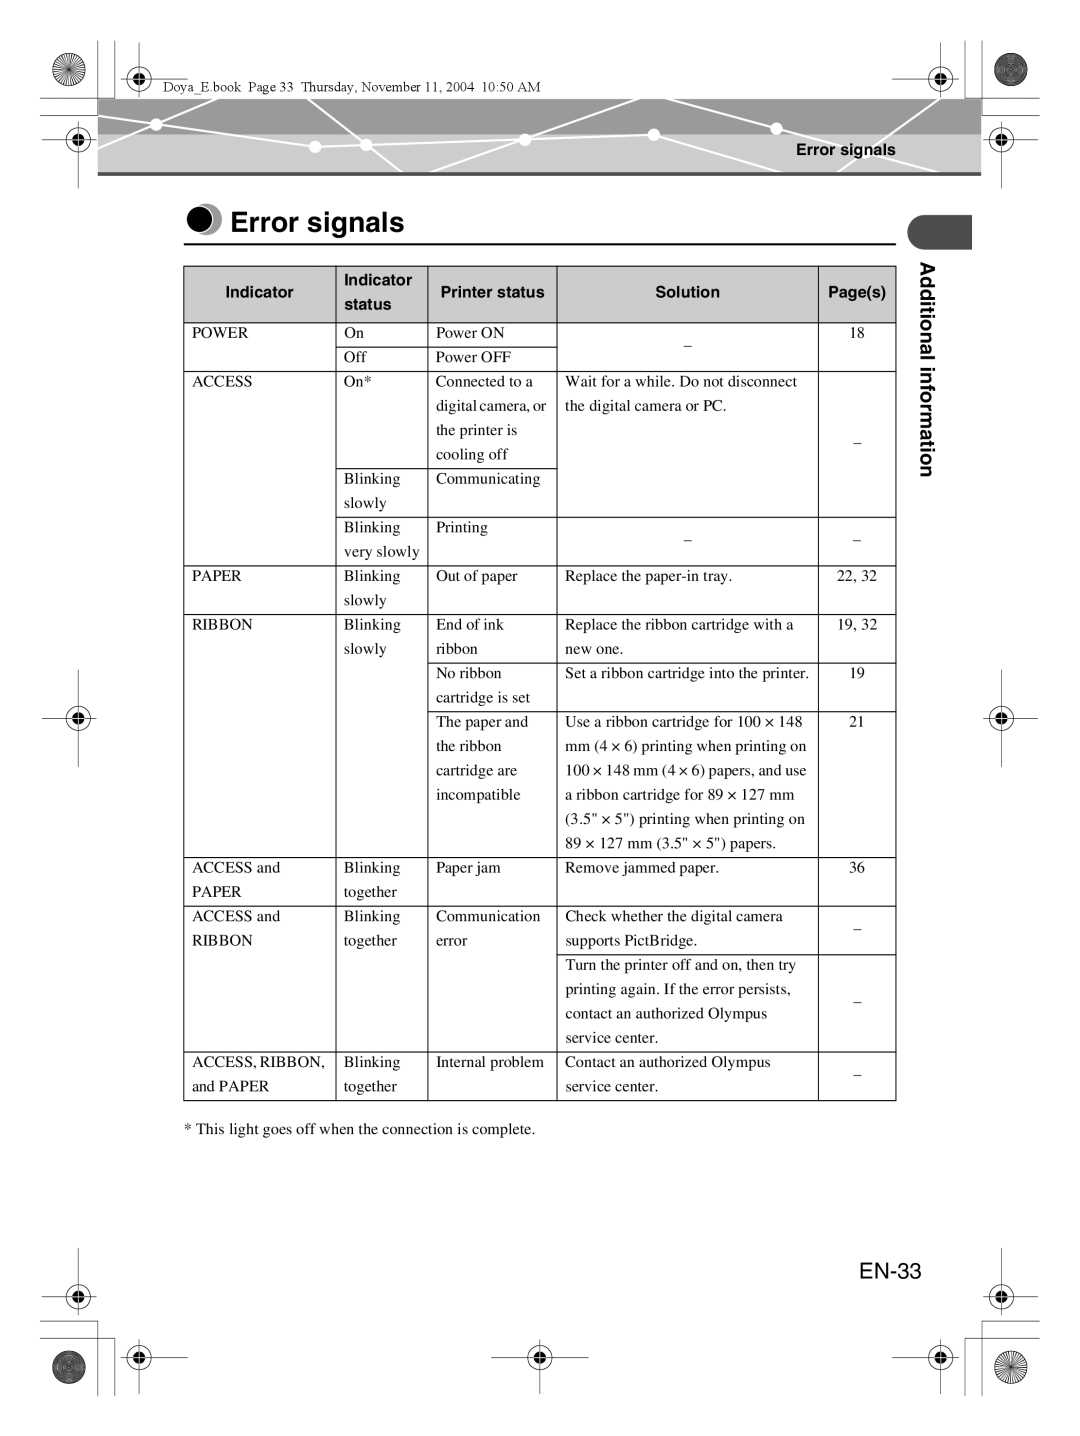 Olympus P-S100 user manual Error signals, EN-33, Indicator, Printer status, Solution, Pages 